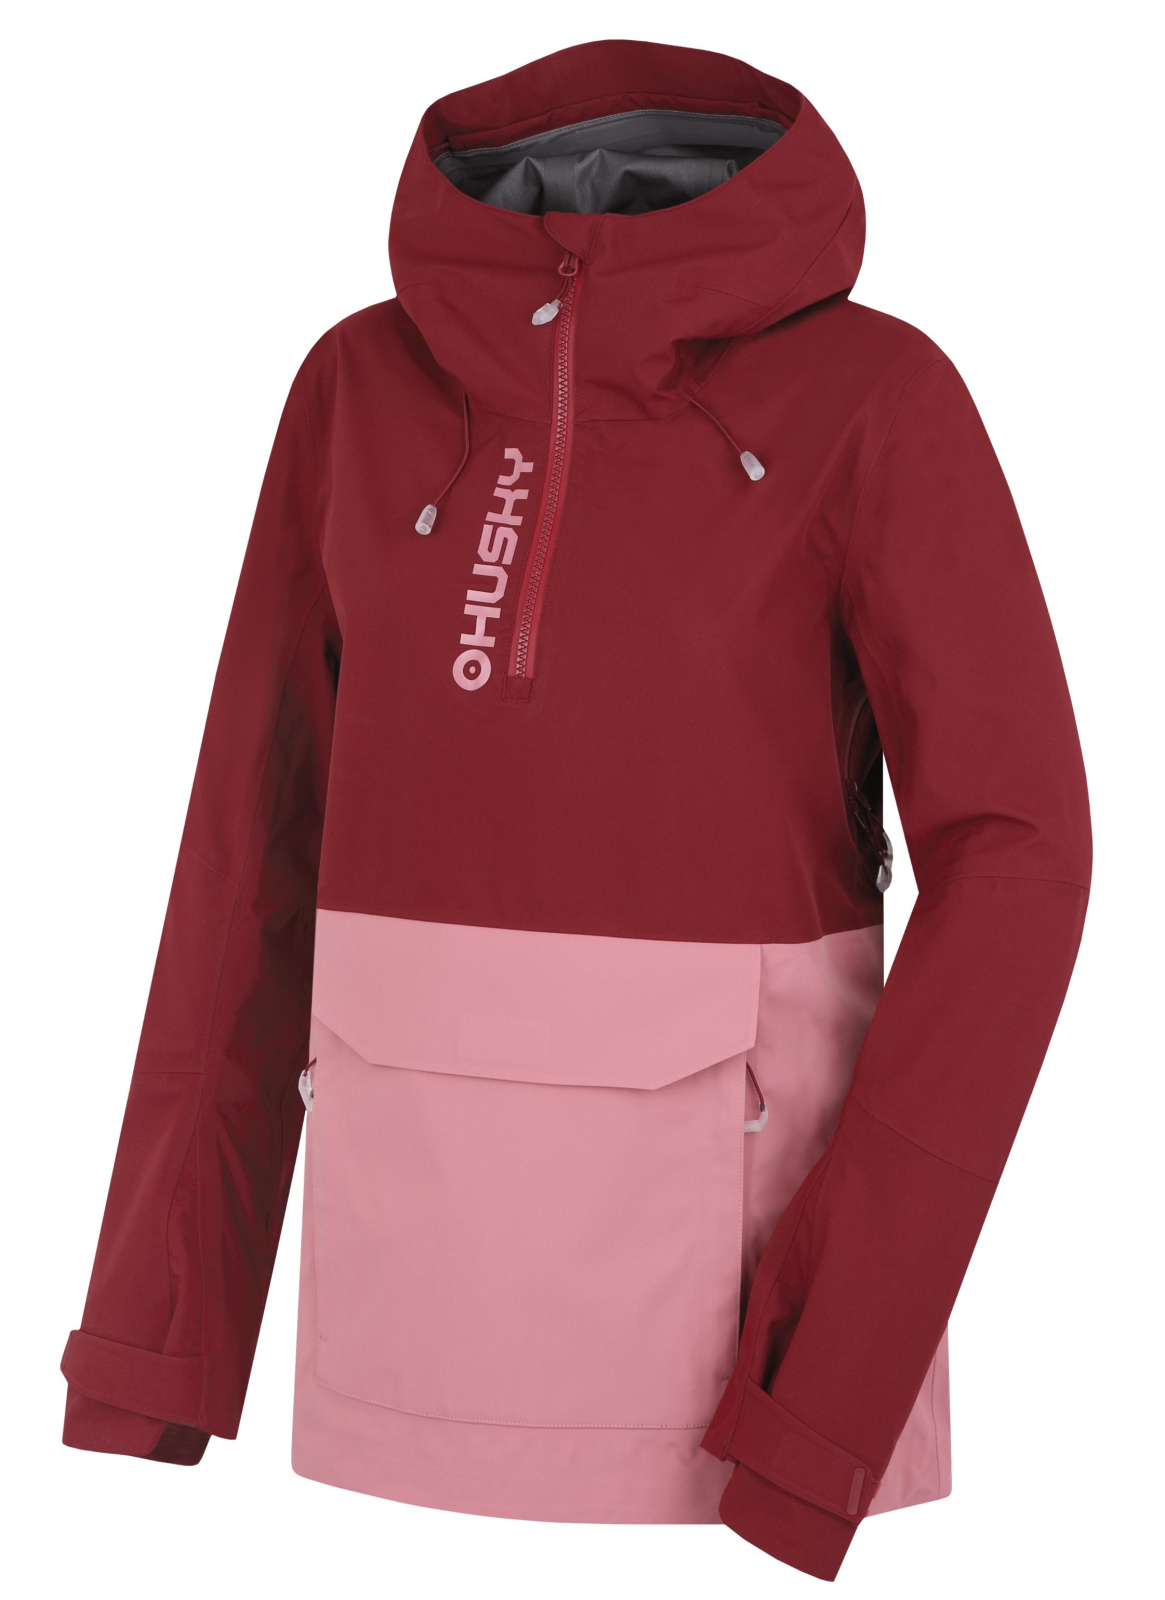 Husky Dámská outdoor bunda Nabbi L bordo/pink Velikost: L dámská bunda